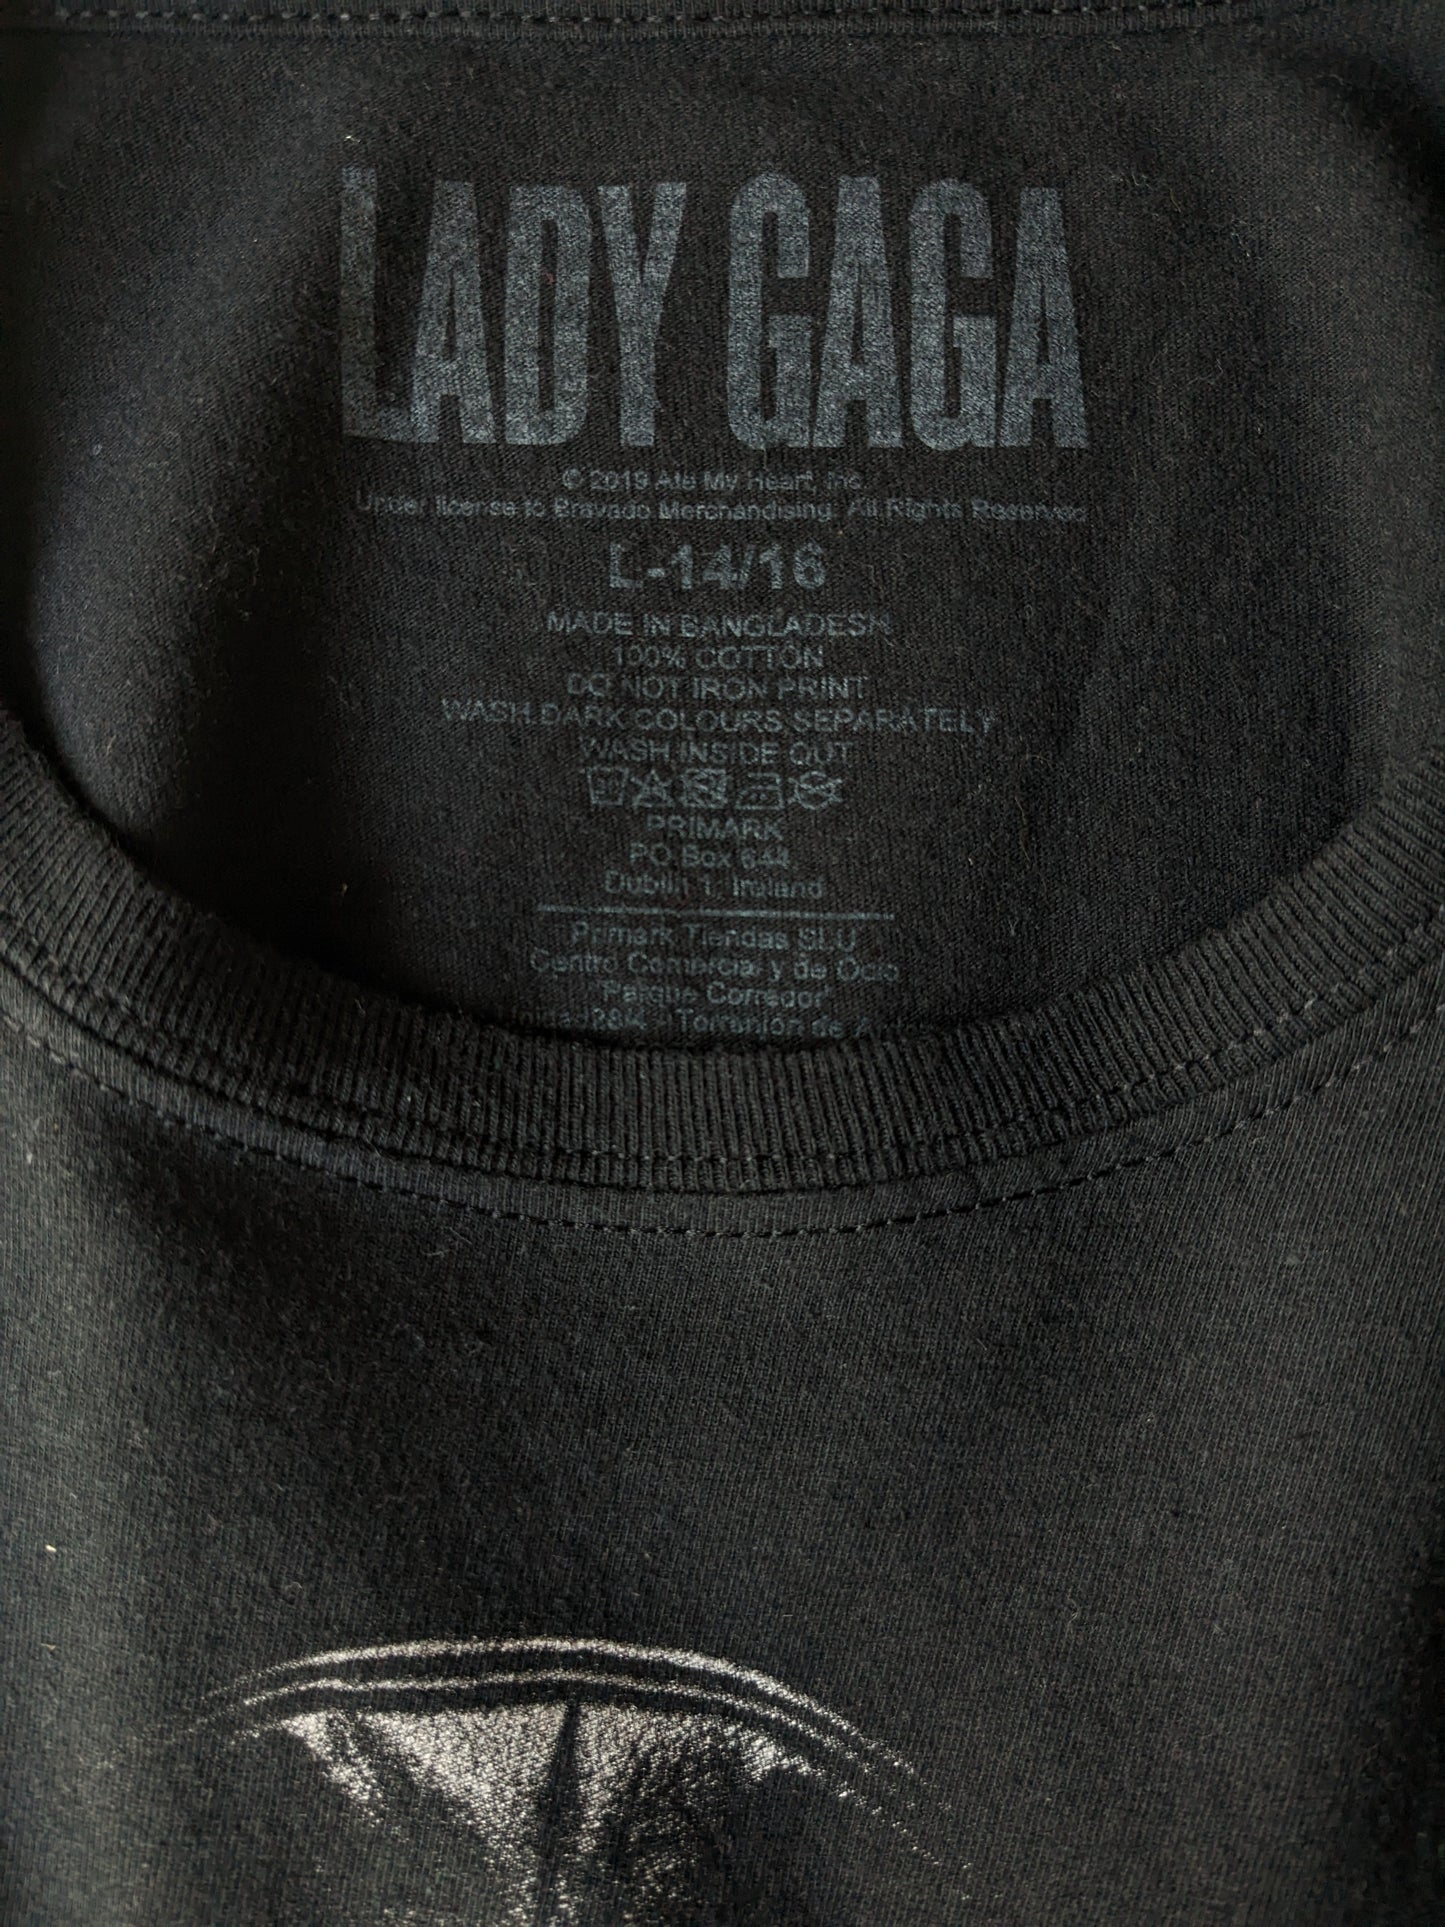 Lady Gaga shirt. Zwart met opdruk. Maat L kids / S adults.